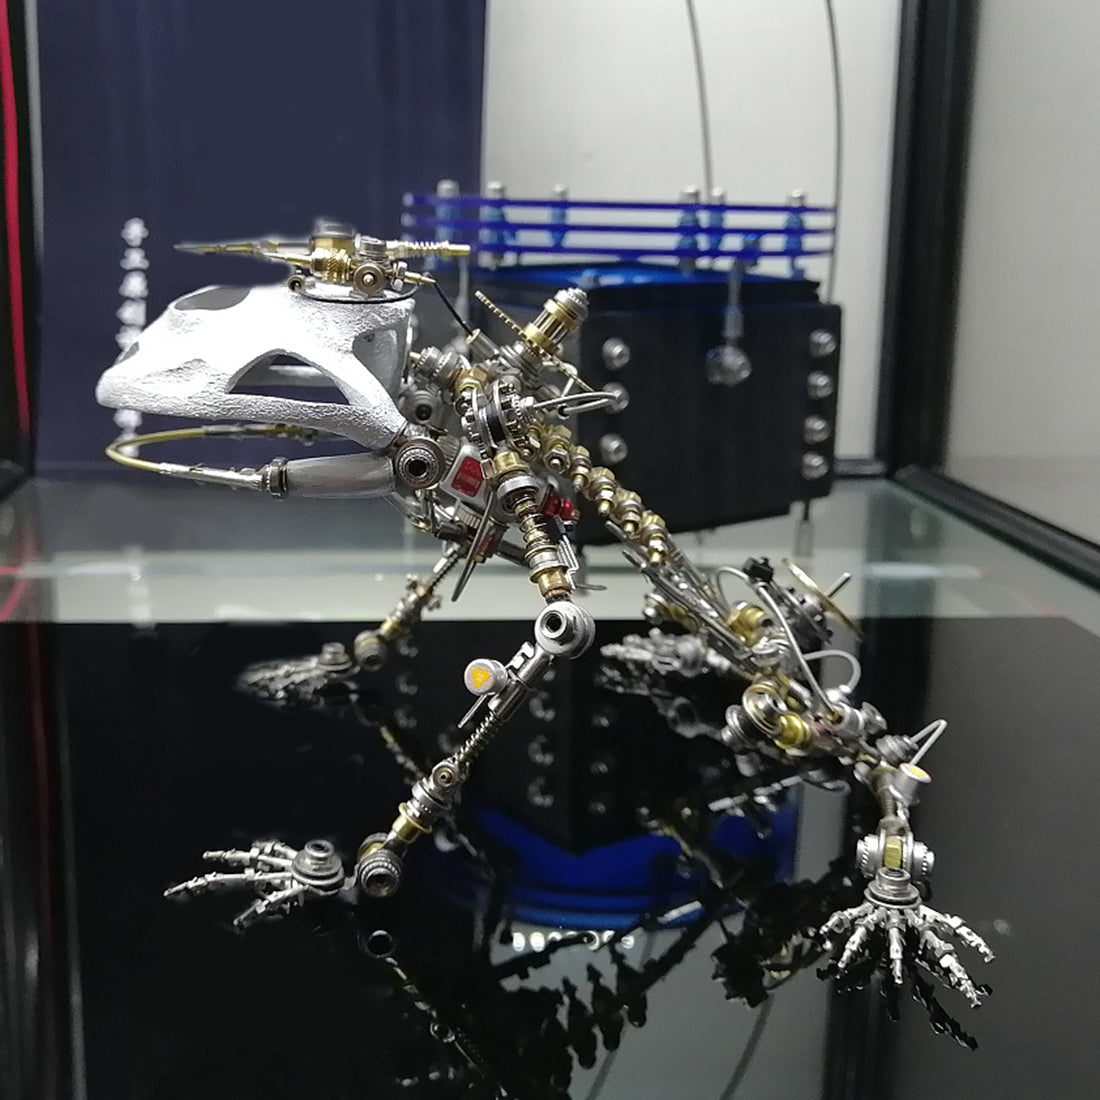 Steampunk Metal Rainforest Frog Model Kits 3D Assembled Crafts for Home Decor